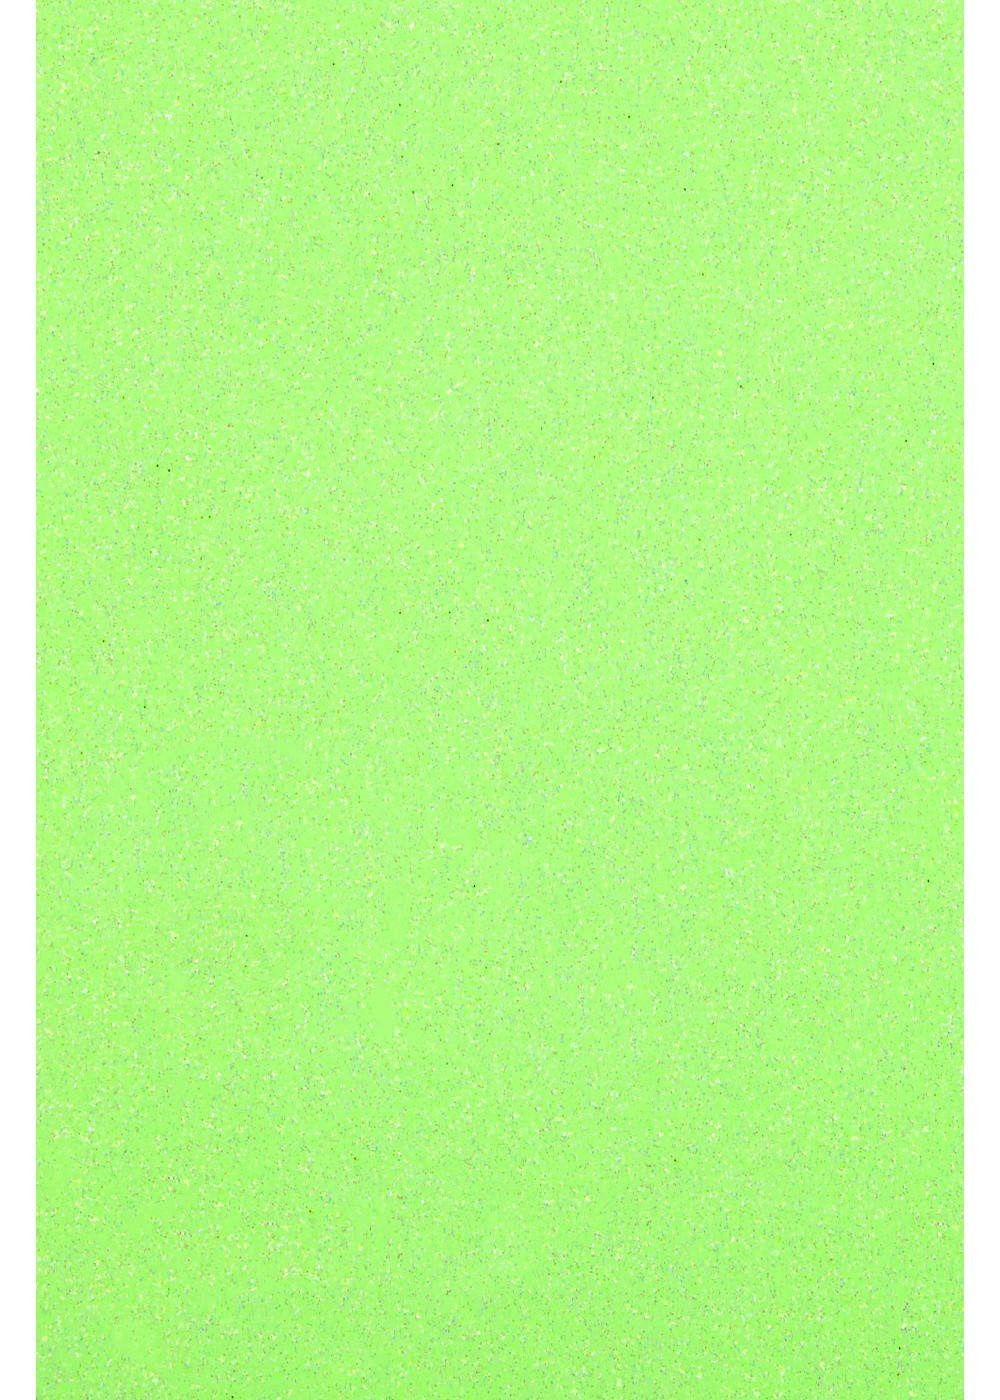 Hilltop Transparentpapier Glitzer Transferfolie/Textilfolie zum Aufbügeln, perfekt zum Plottern Neon Green